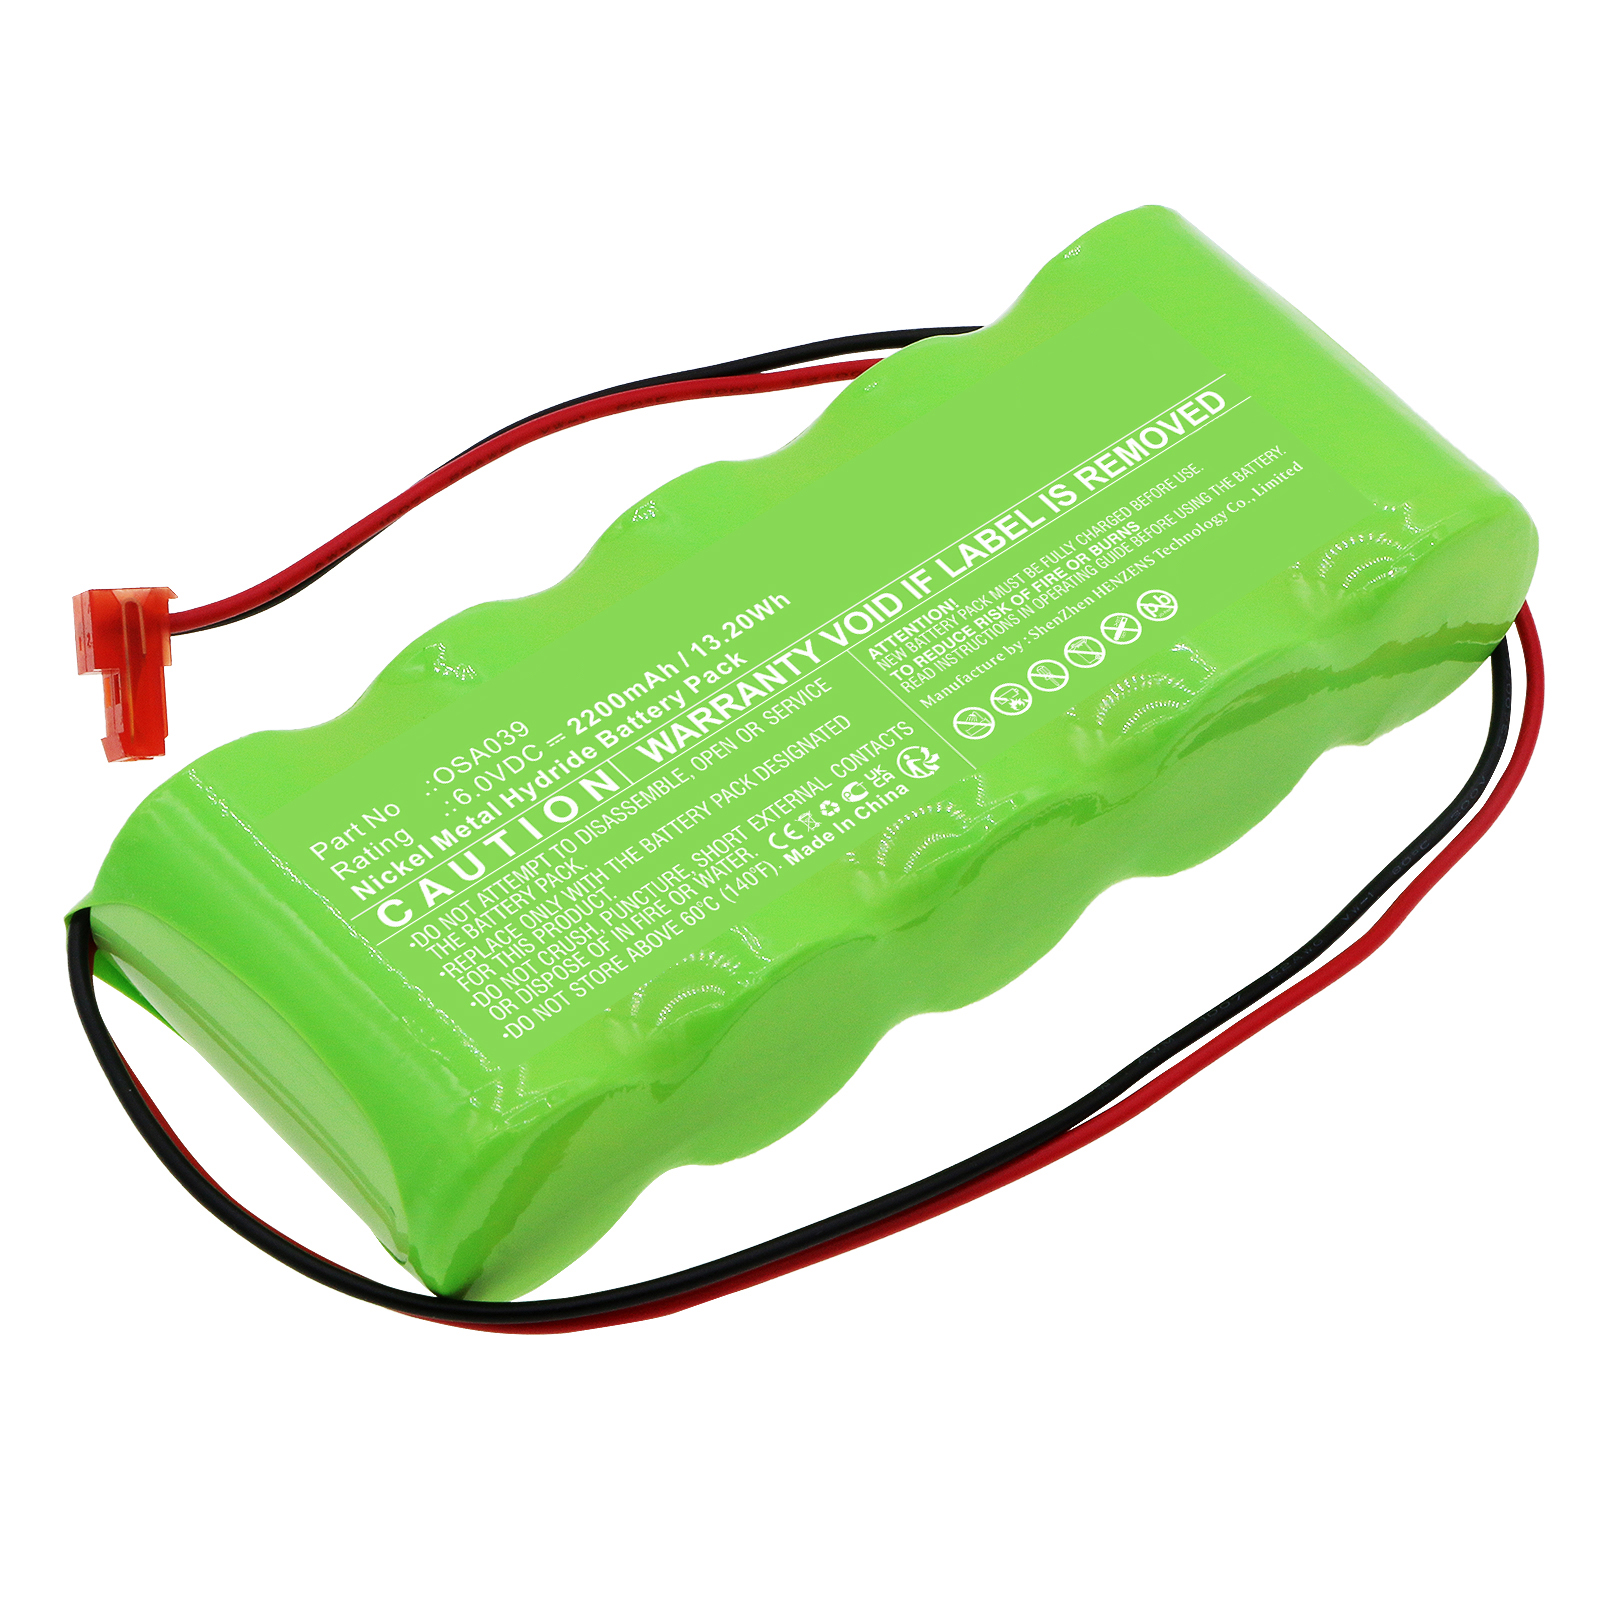 Synergy Digital Emergency Lighting Battery, Compatible with PowerSonic OSA039 Emergency Lighting Battery (Ni-MH, 6V, 2200mAh)